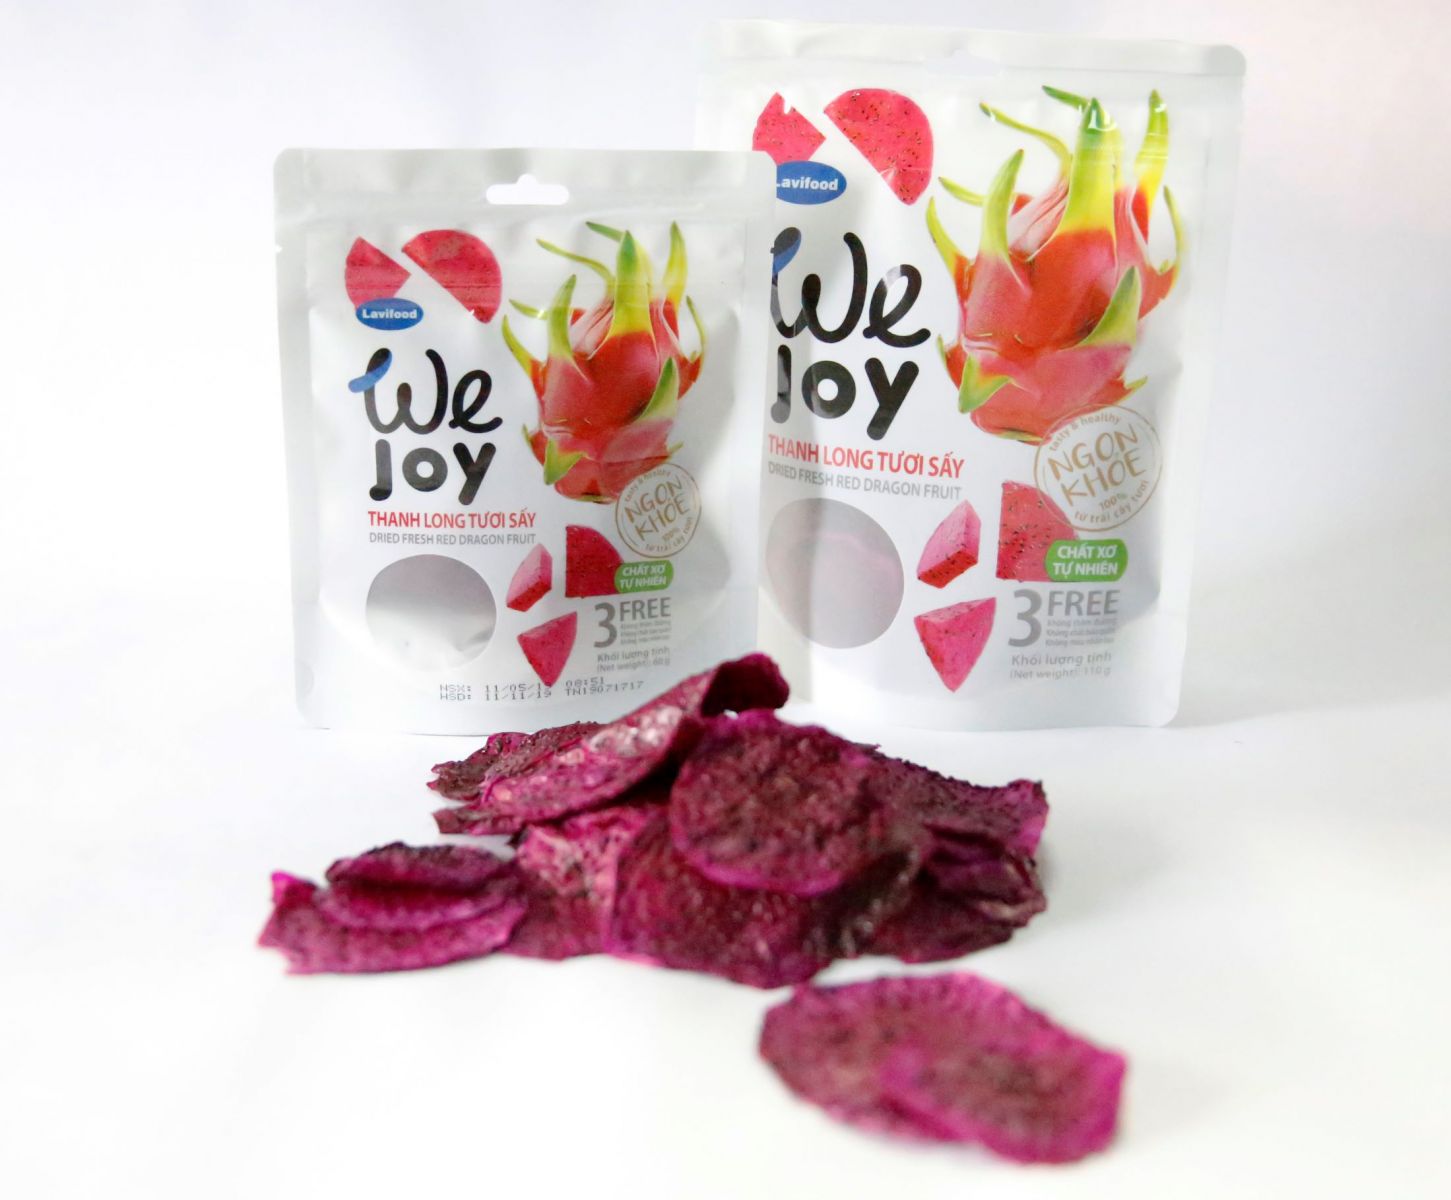 https://www.lavifood.com/en/products/dried-fruit-vegetables/we-joy-dried-red-dragon-fruit